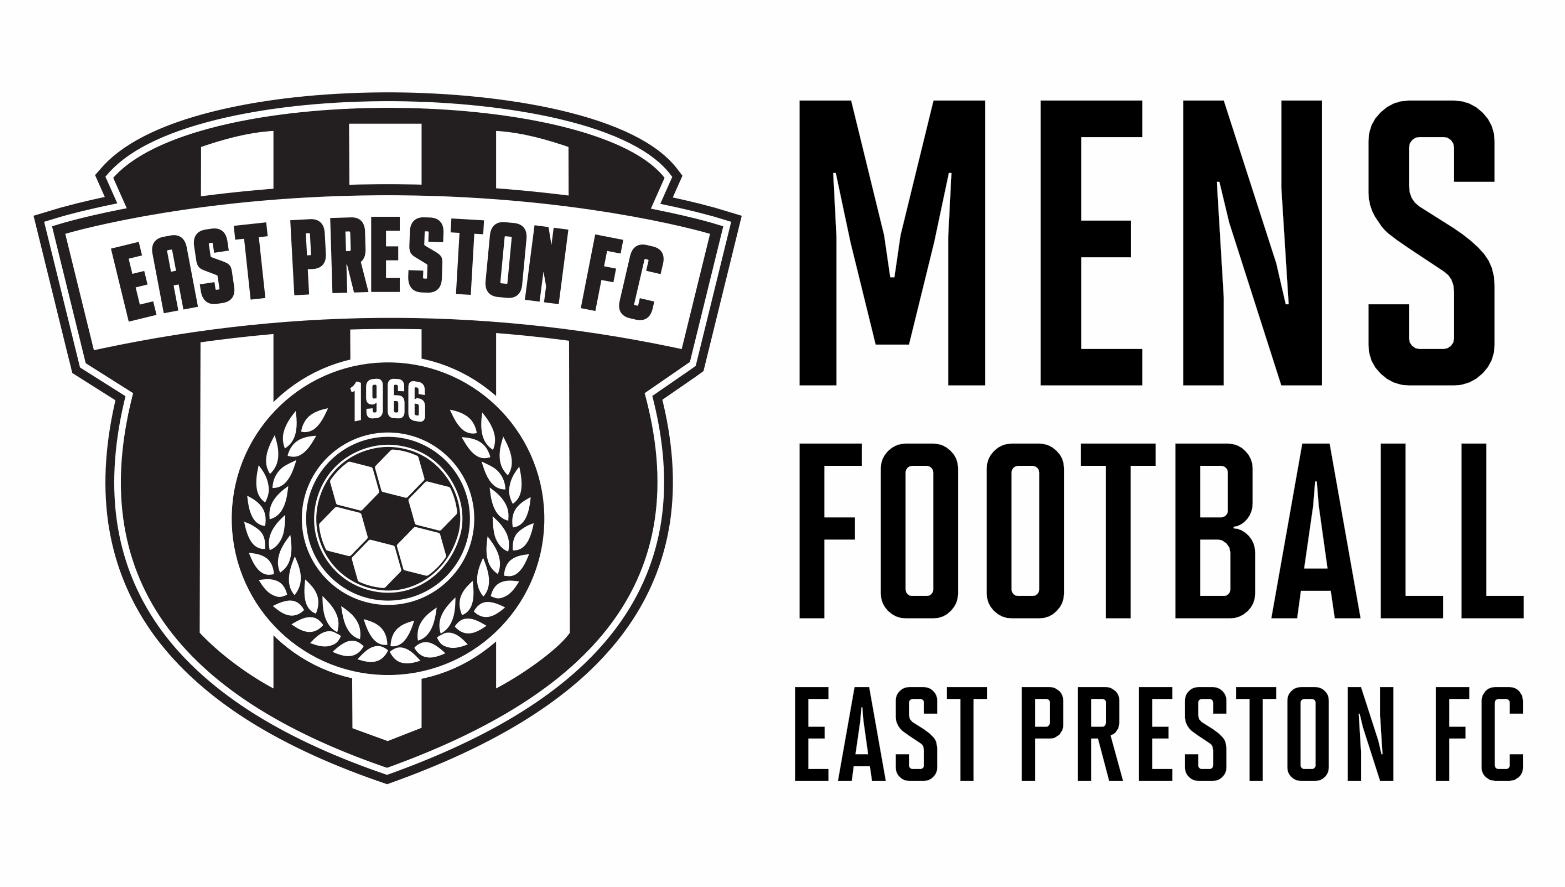 East Preston Sports and Social Club and East Preston Football Club ...